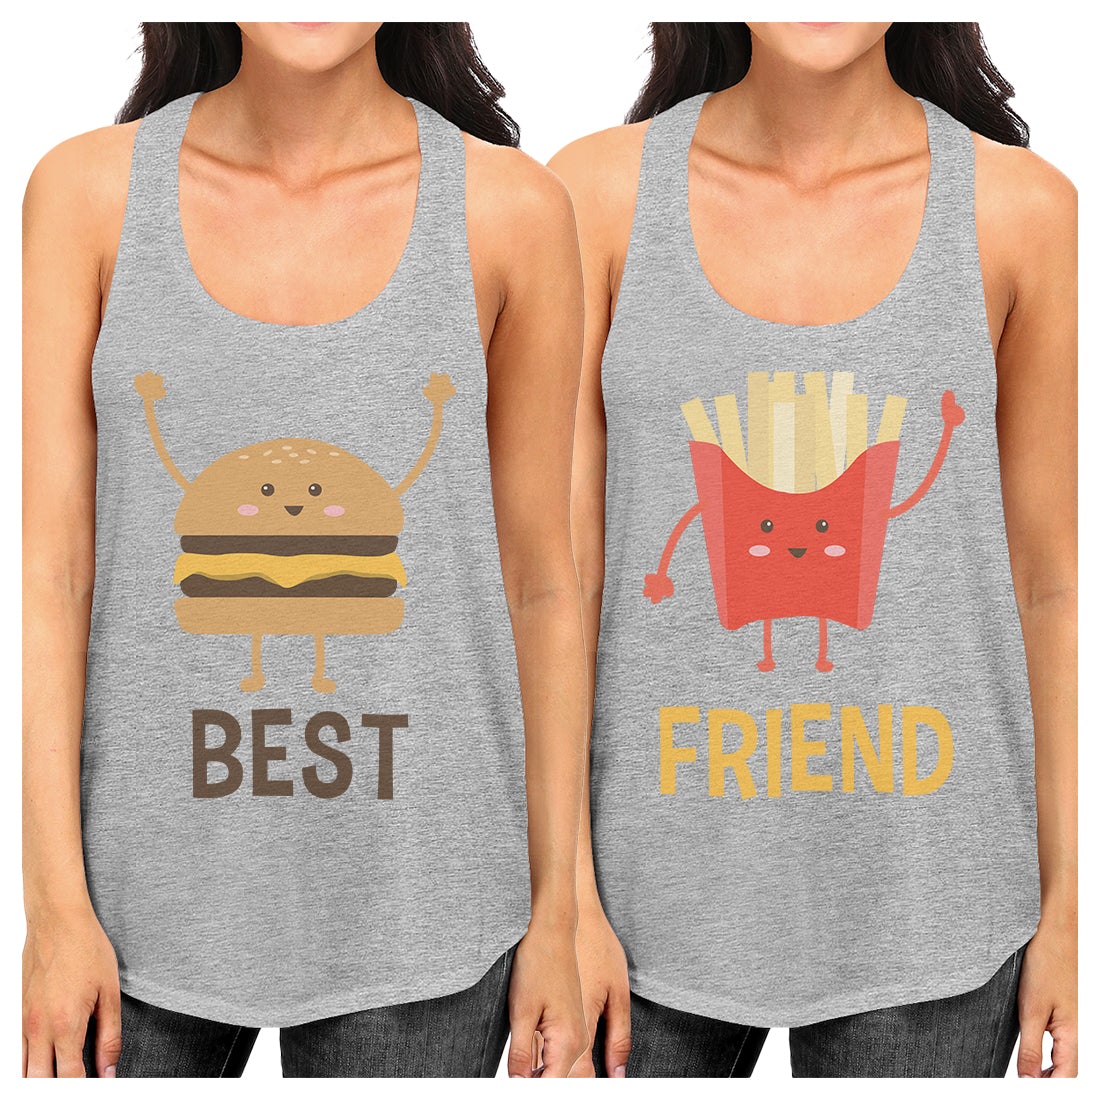 Hamburger And Fries Best Friend Gift Shirts Womens Cute Tank Tops Gray